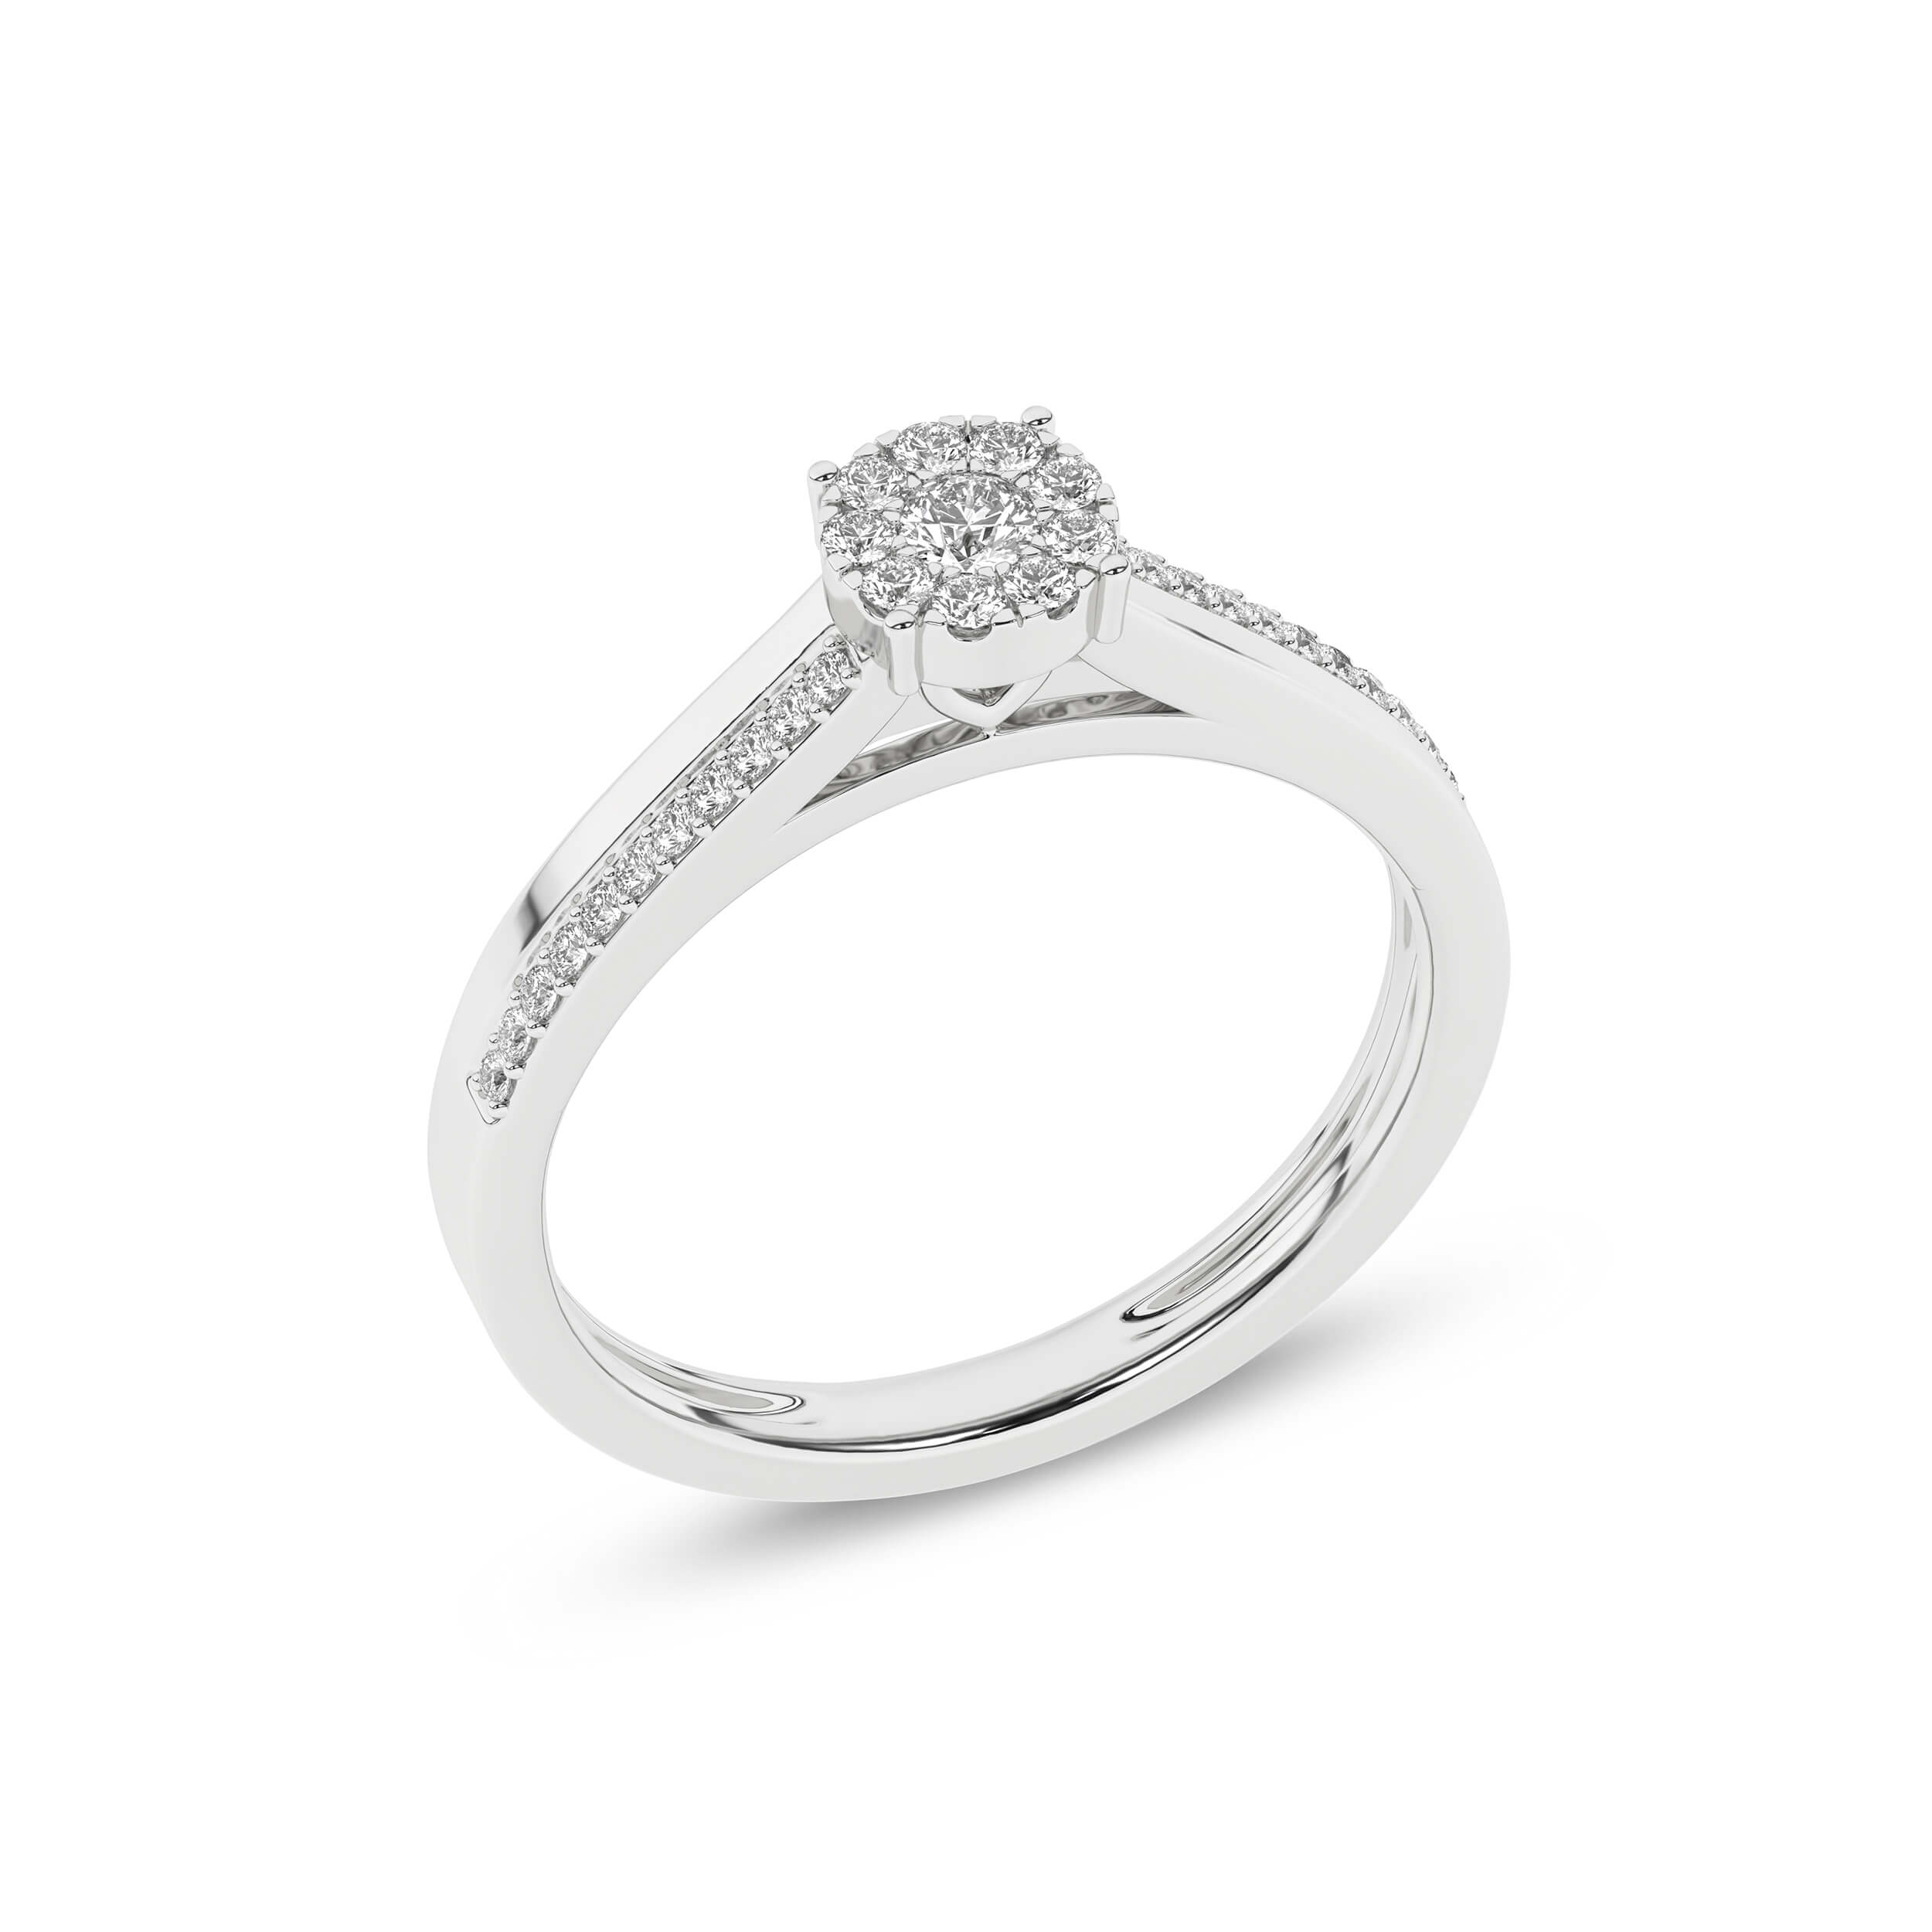 Inel de logodna din Aur Alb 14K cu Diamante 0.15Ct, articol RB6344, previzualizare foto 4